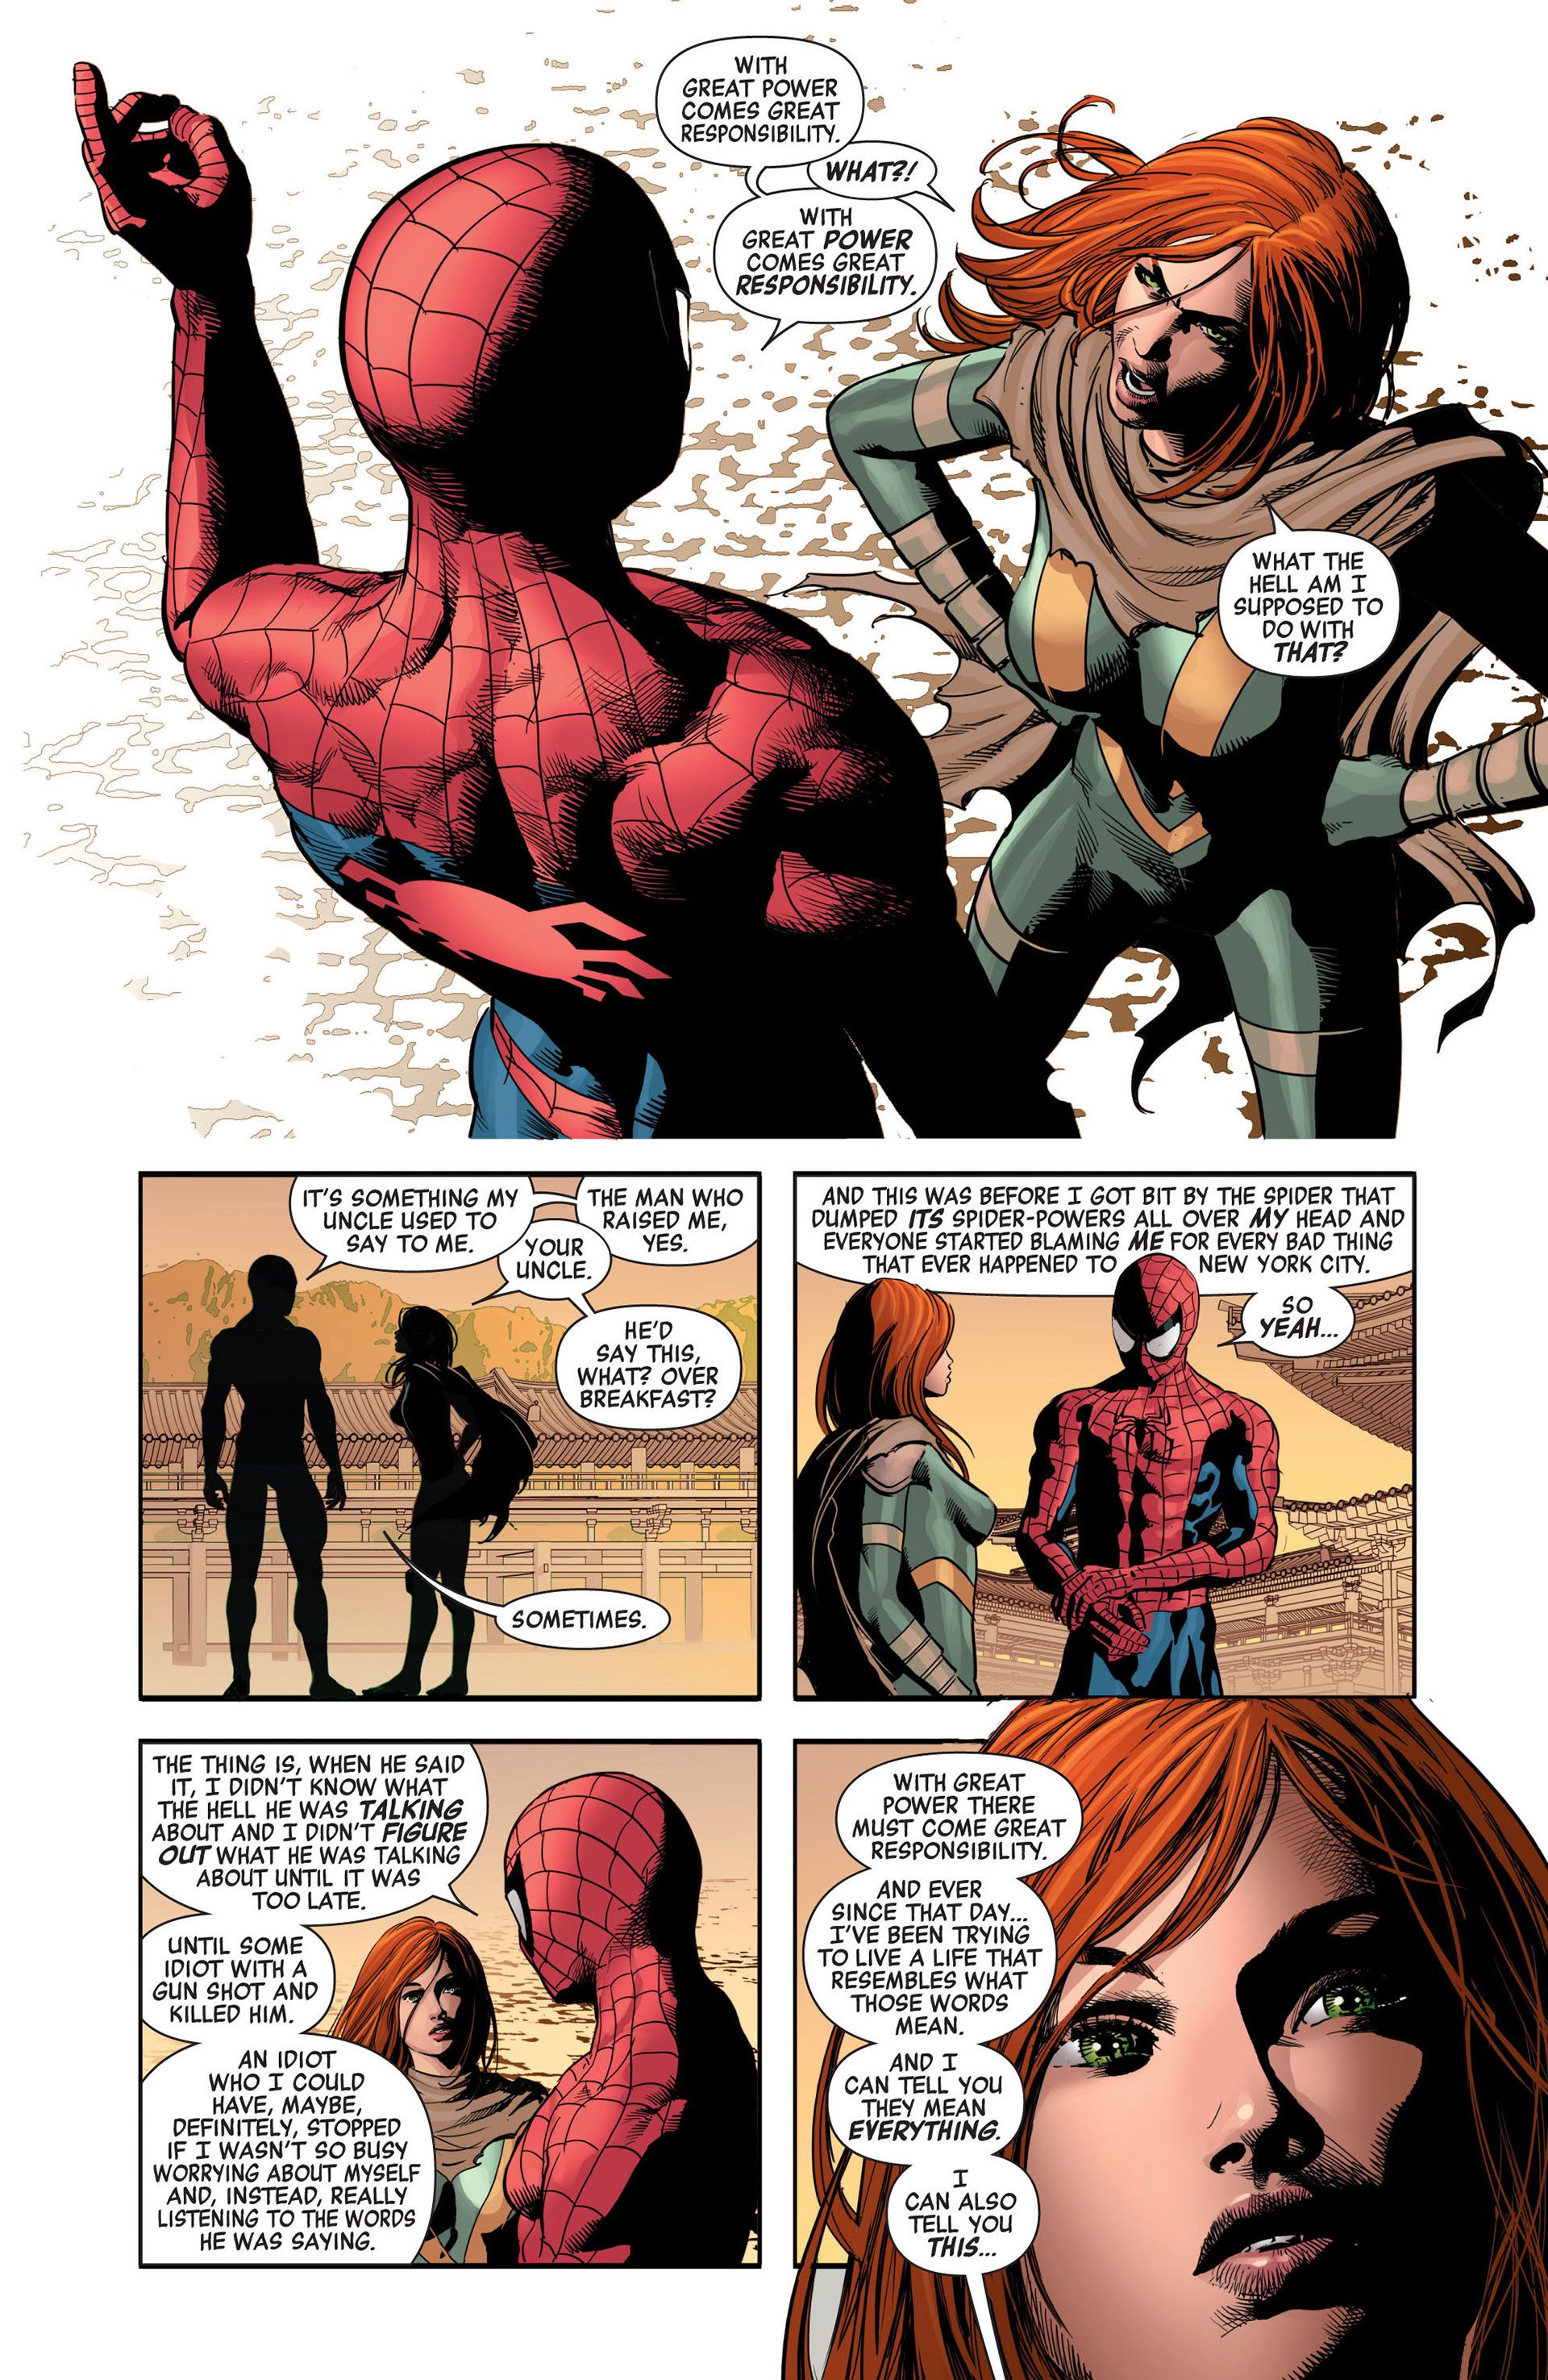 Spider-Man le enseña a Hope Summers